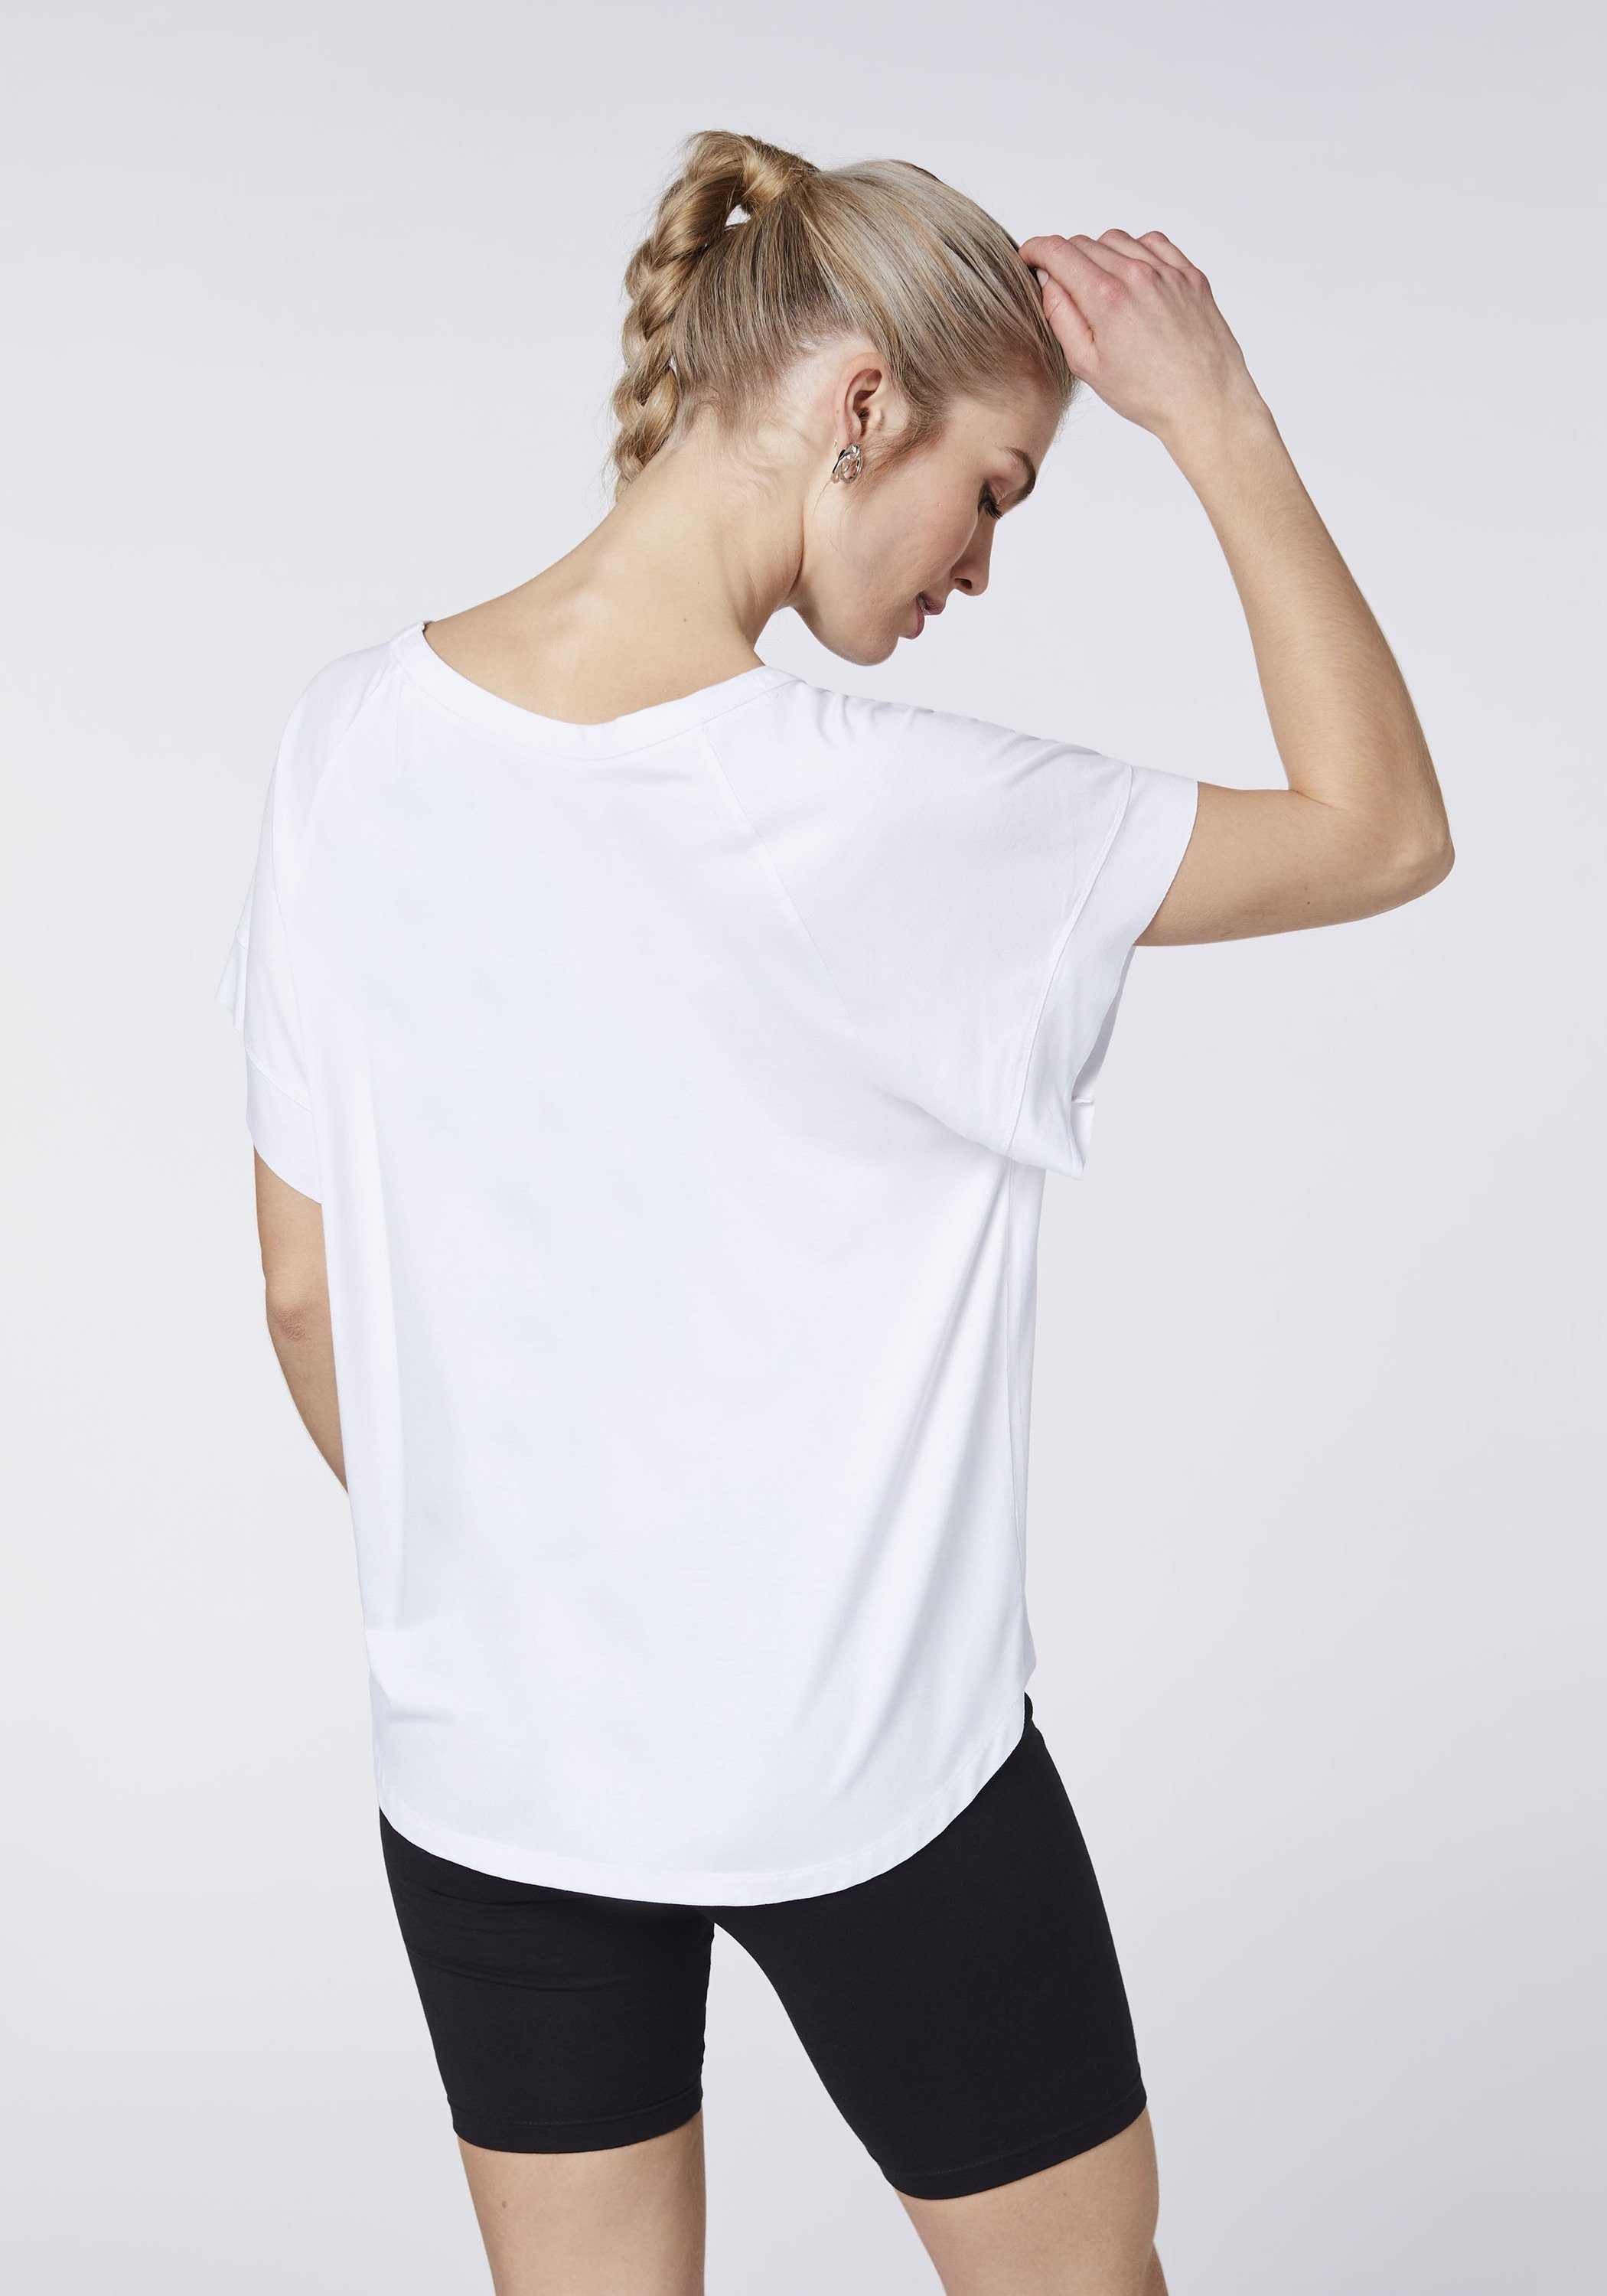 JETTE White und Shape Print-Shirt Comfort-Fit 11-0601 boxy Bright SPORT